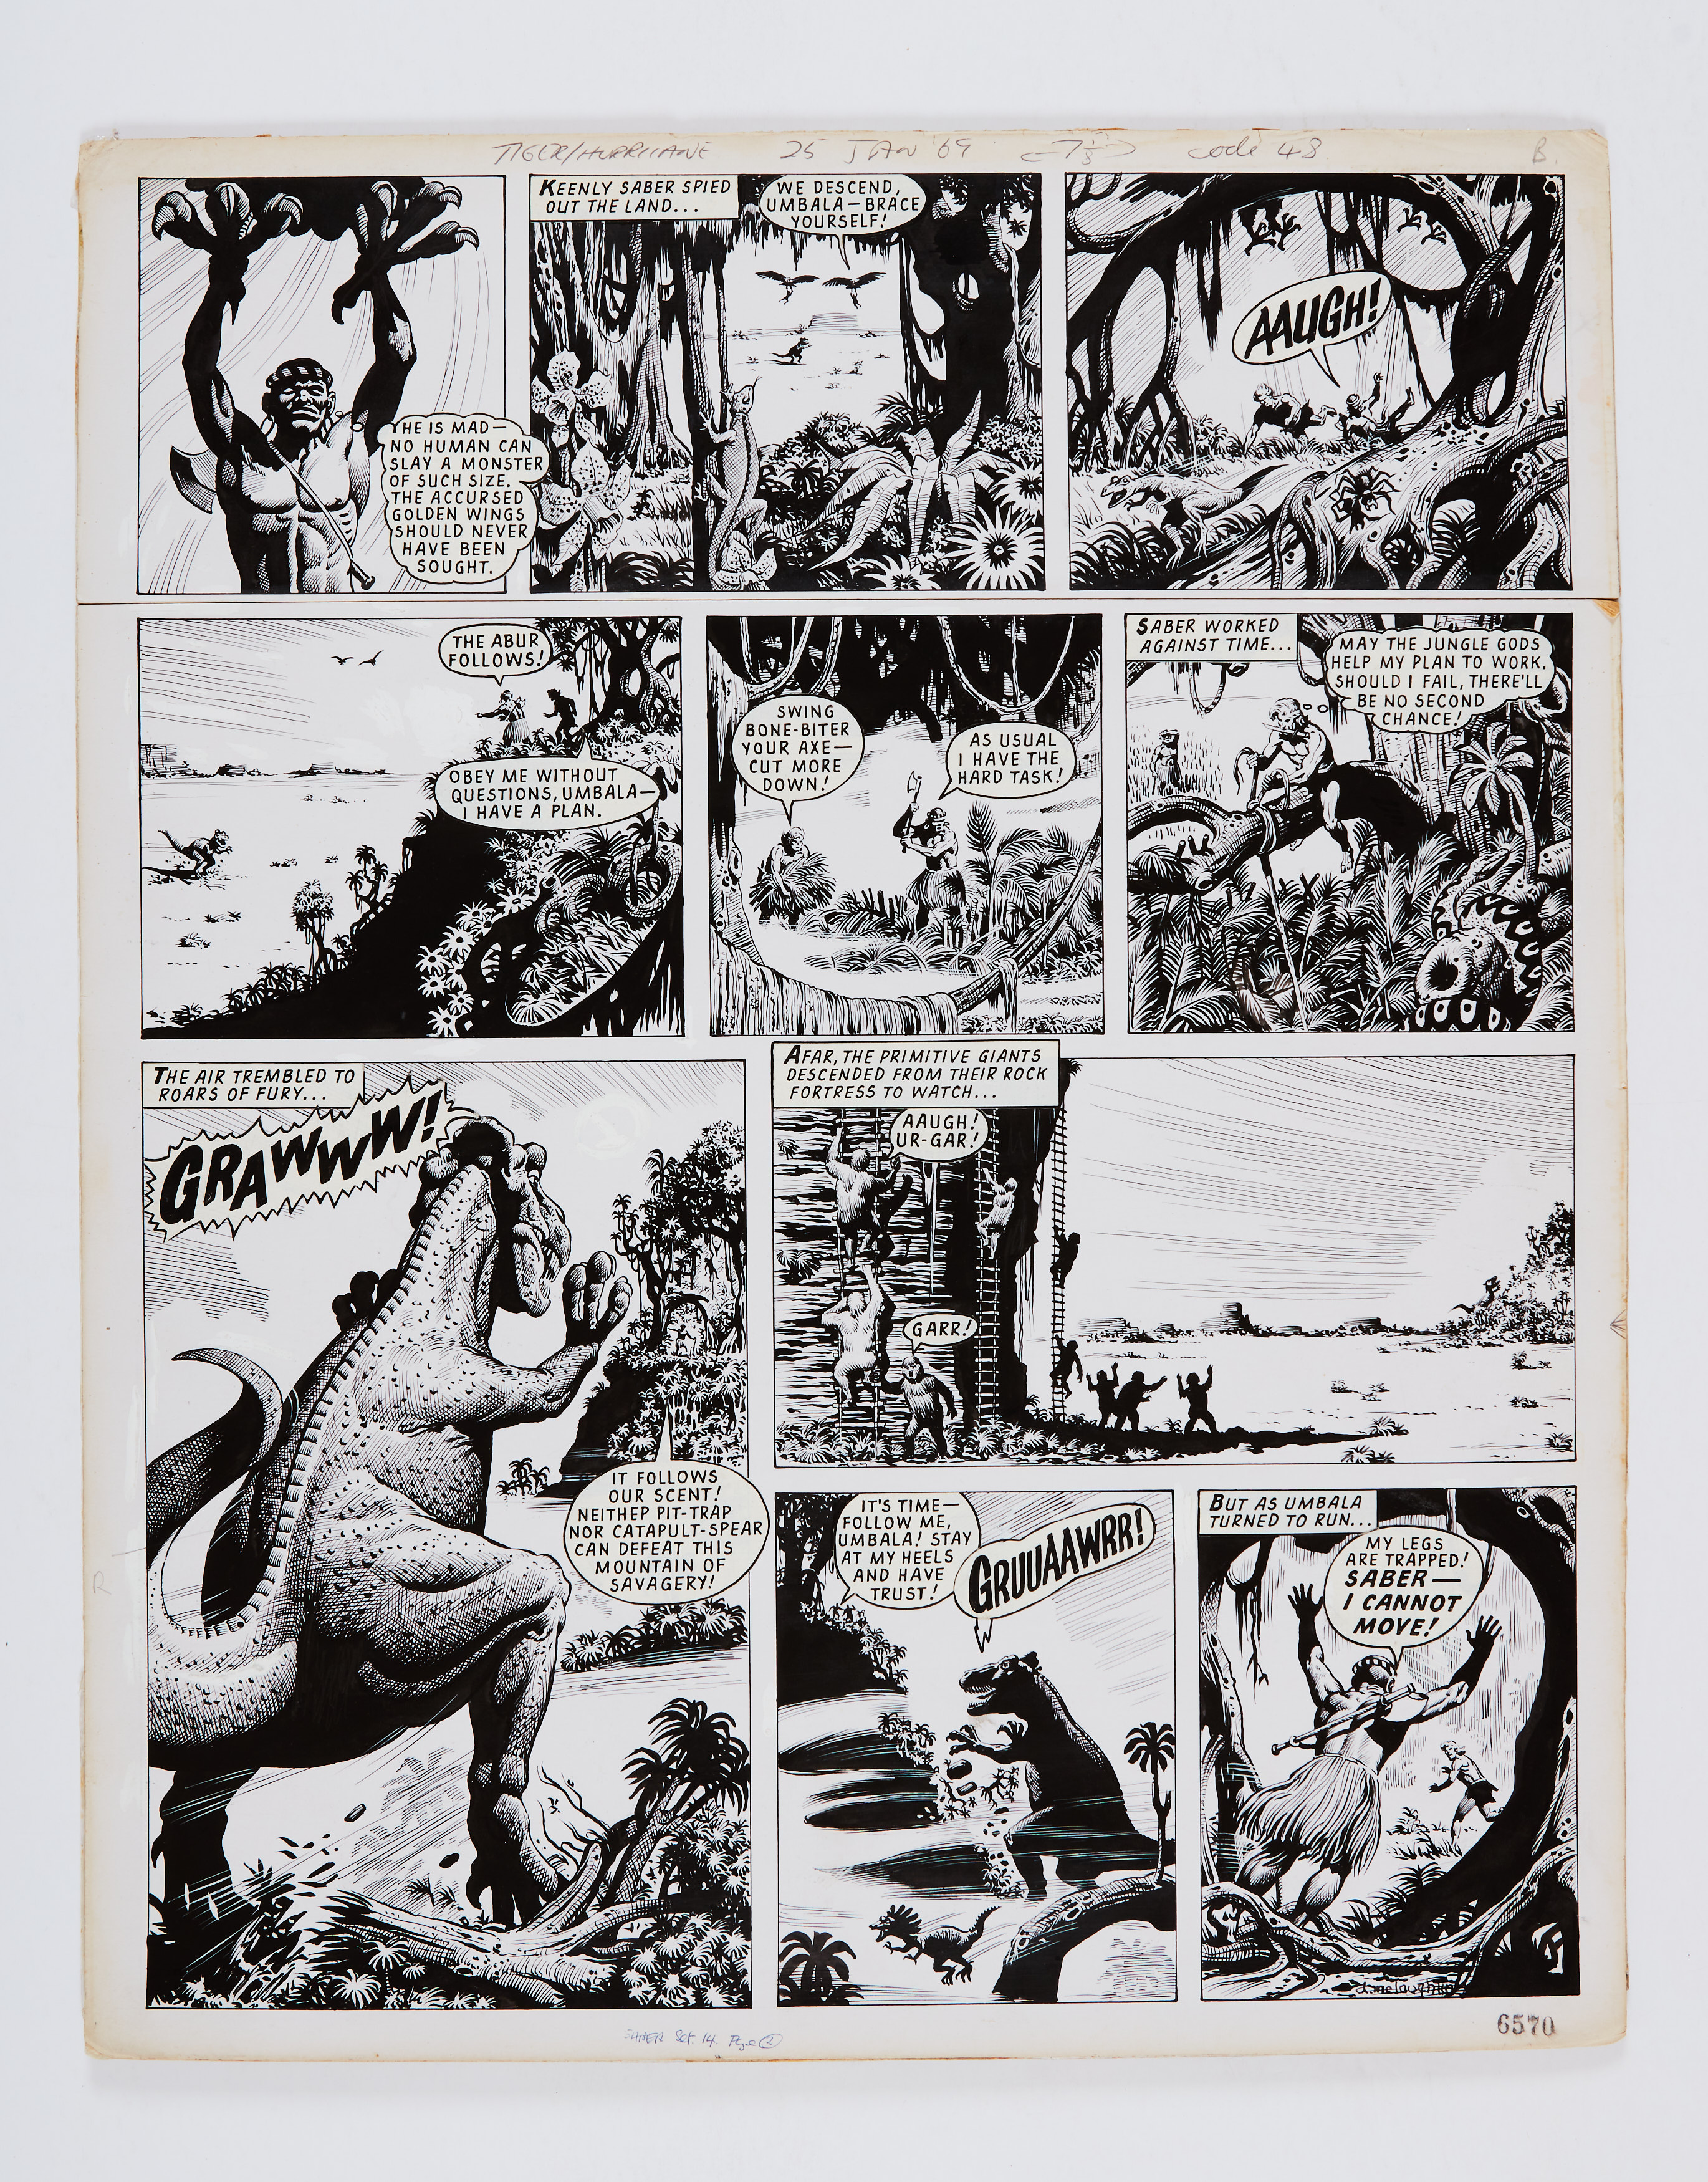 Saber original artwork (1969) drawn and signed by Denis McLoughlin for Tiger & Hurricane 25 Jan